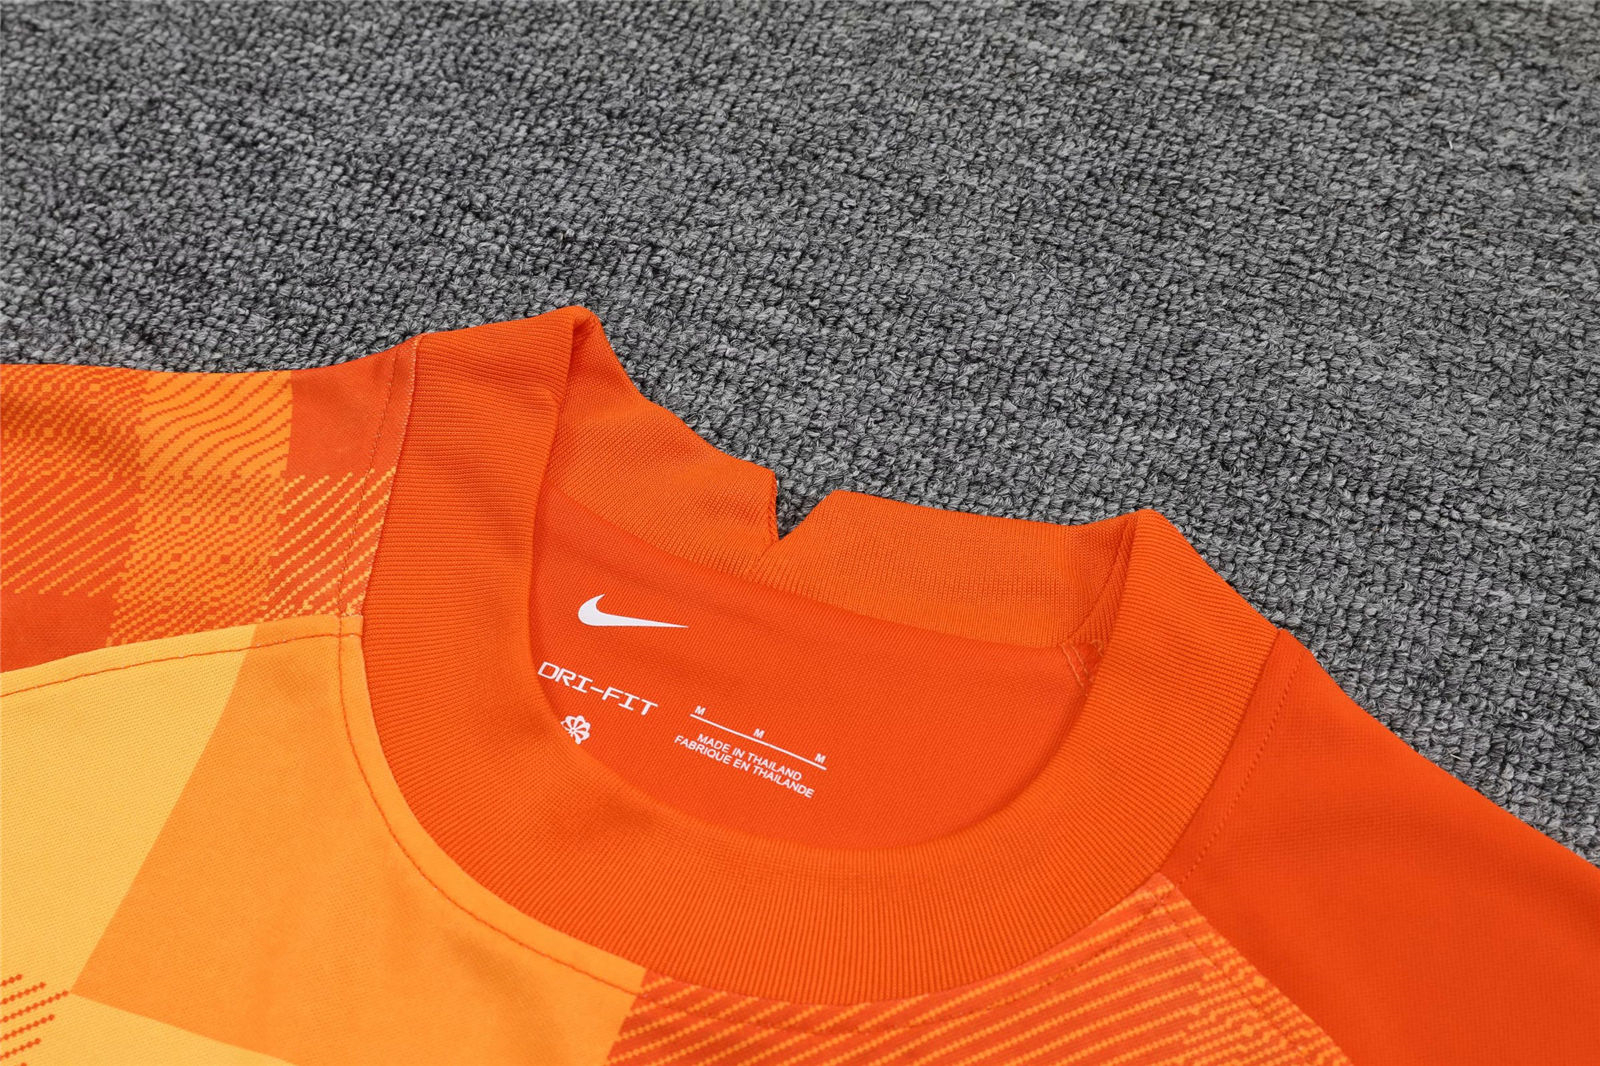 Barcelona Soccer Jersey + Short Replica Goalkeeper Orange Long Sleeve Mens 2021/22